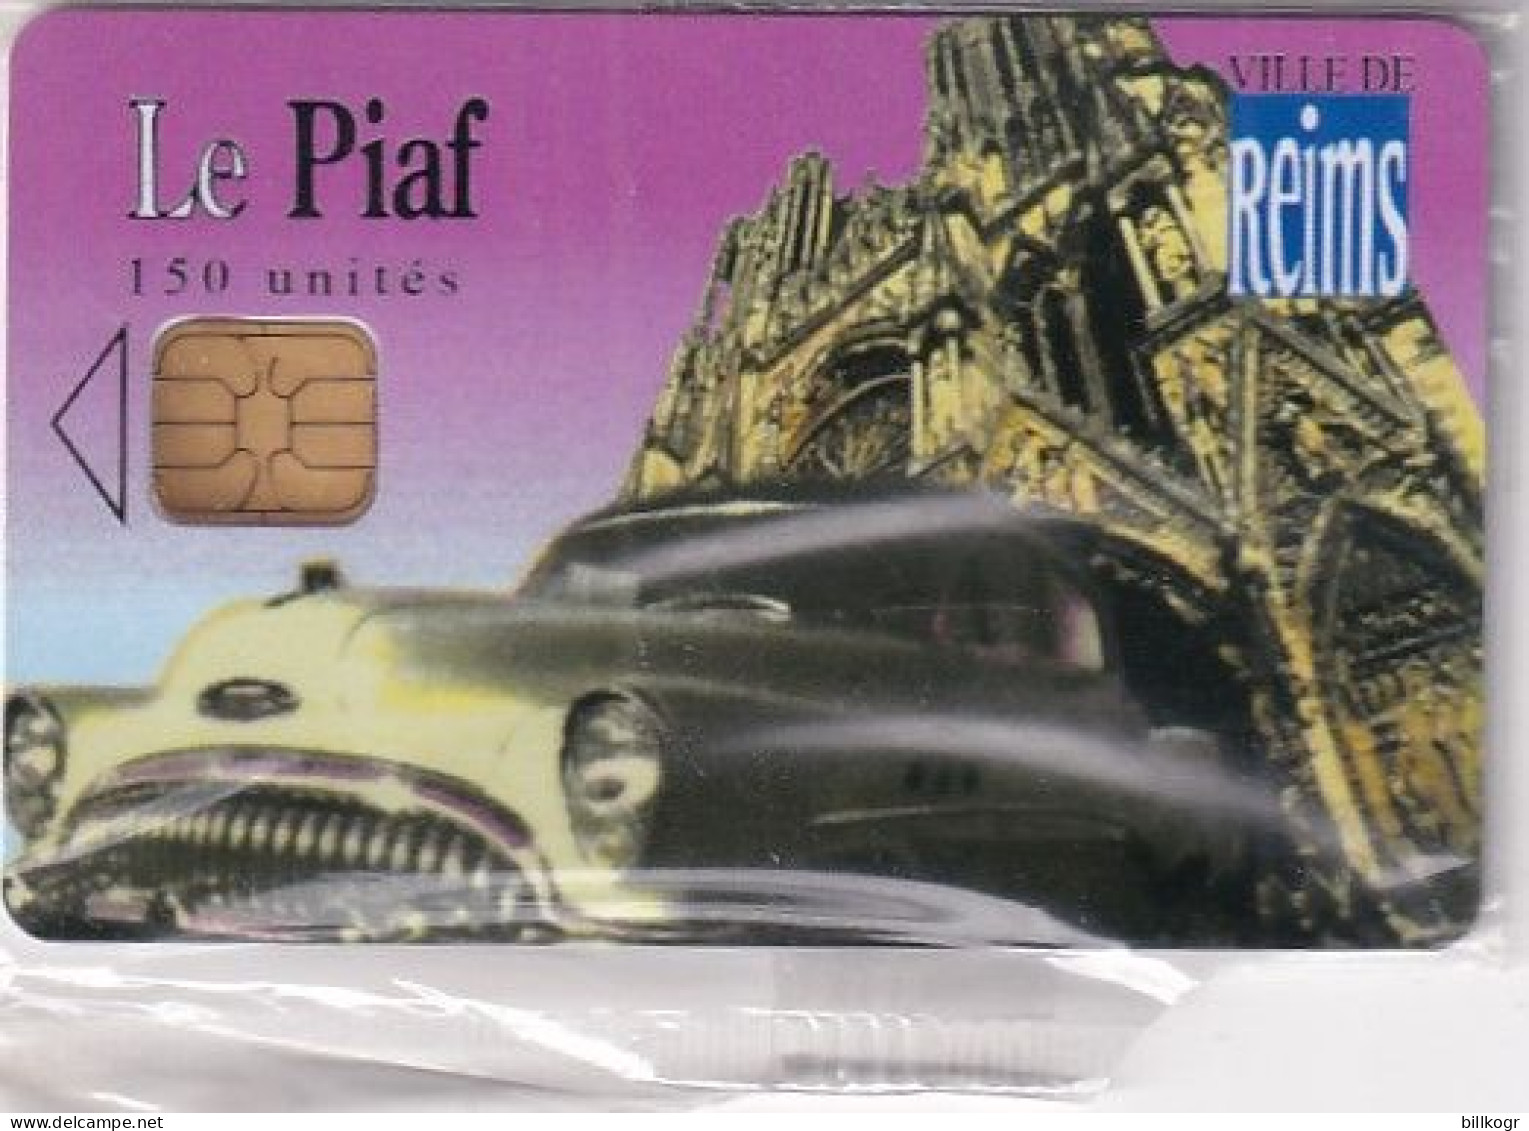 FRANCE - Le Piaf/Ville De Reims 150 Unites, Tirage 2900, 07/06, Mint - Scontrini Di Parcheggio